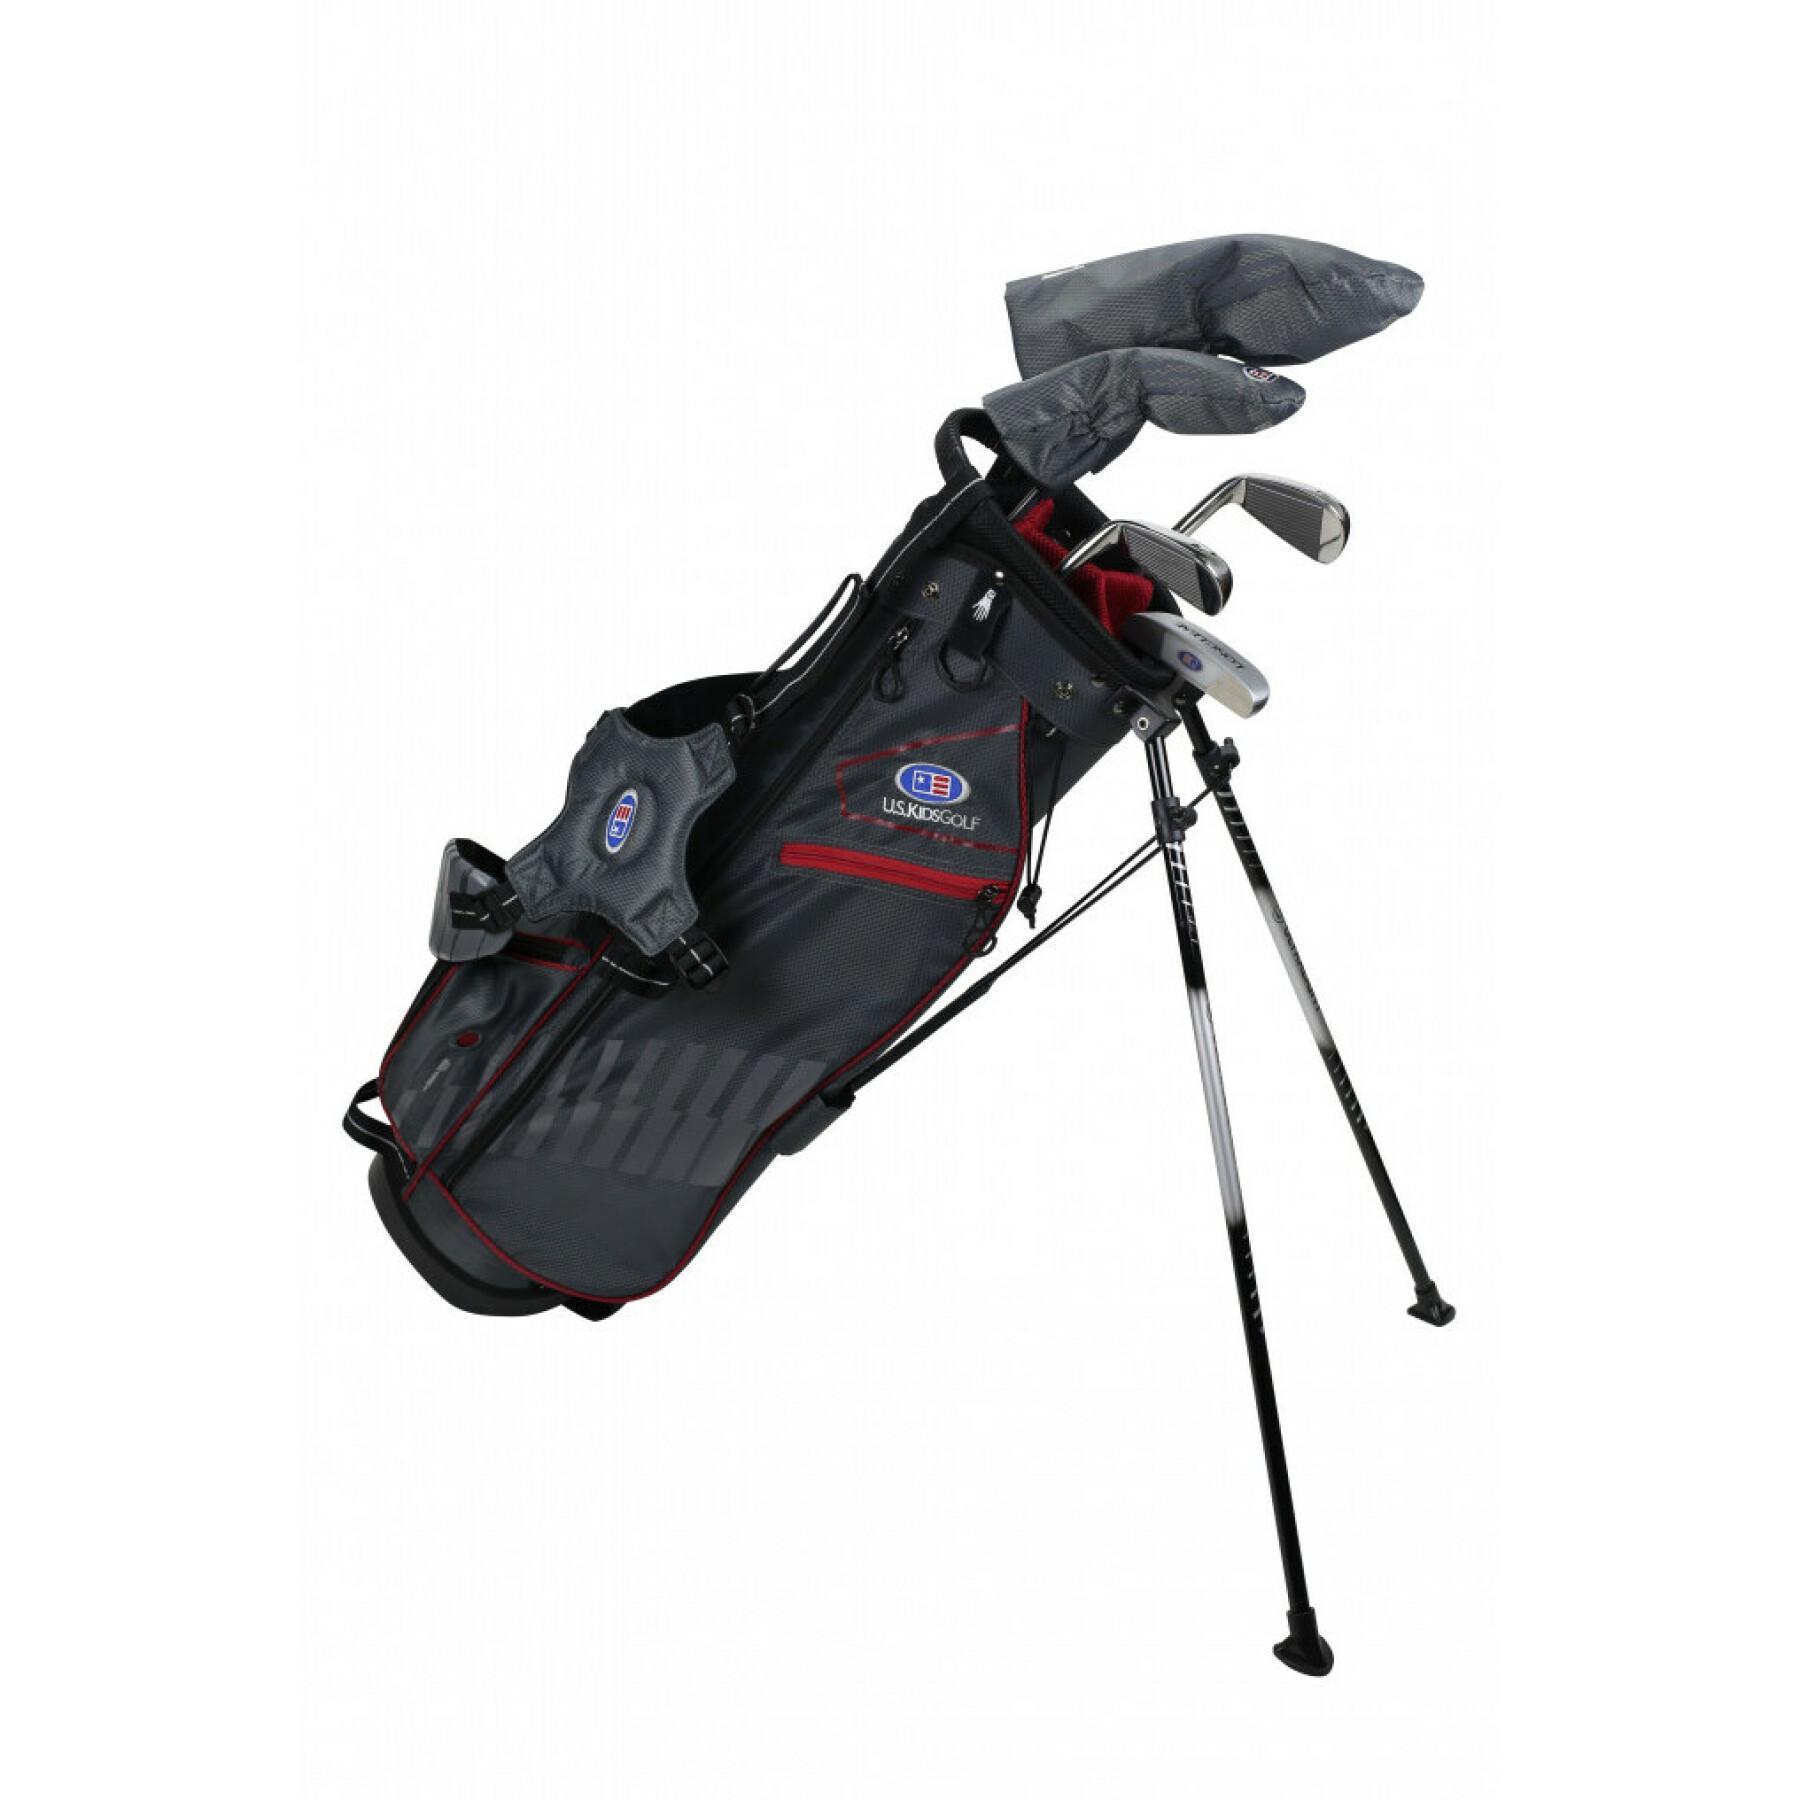 Kit (bag + 5 clubs) left handed boy U.S Kids Golf ultralight us60 2020